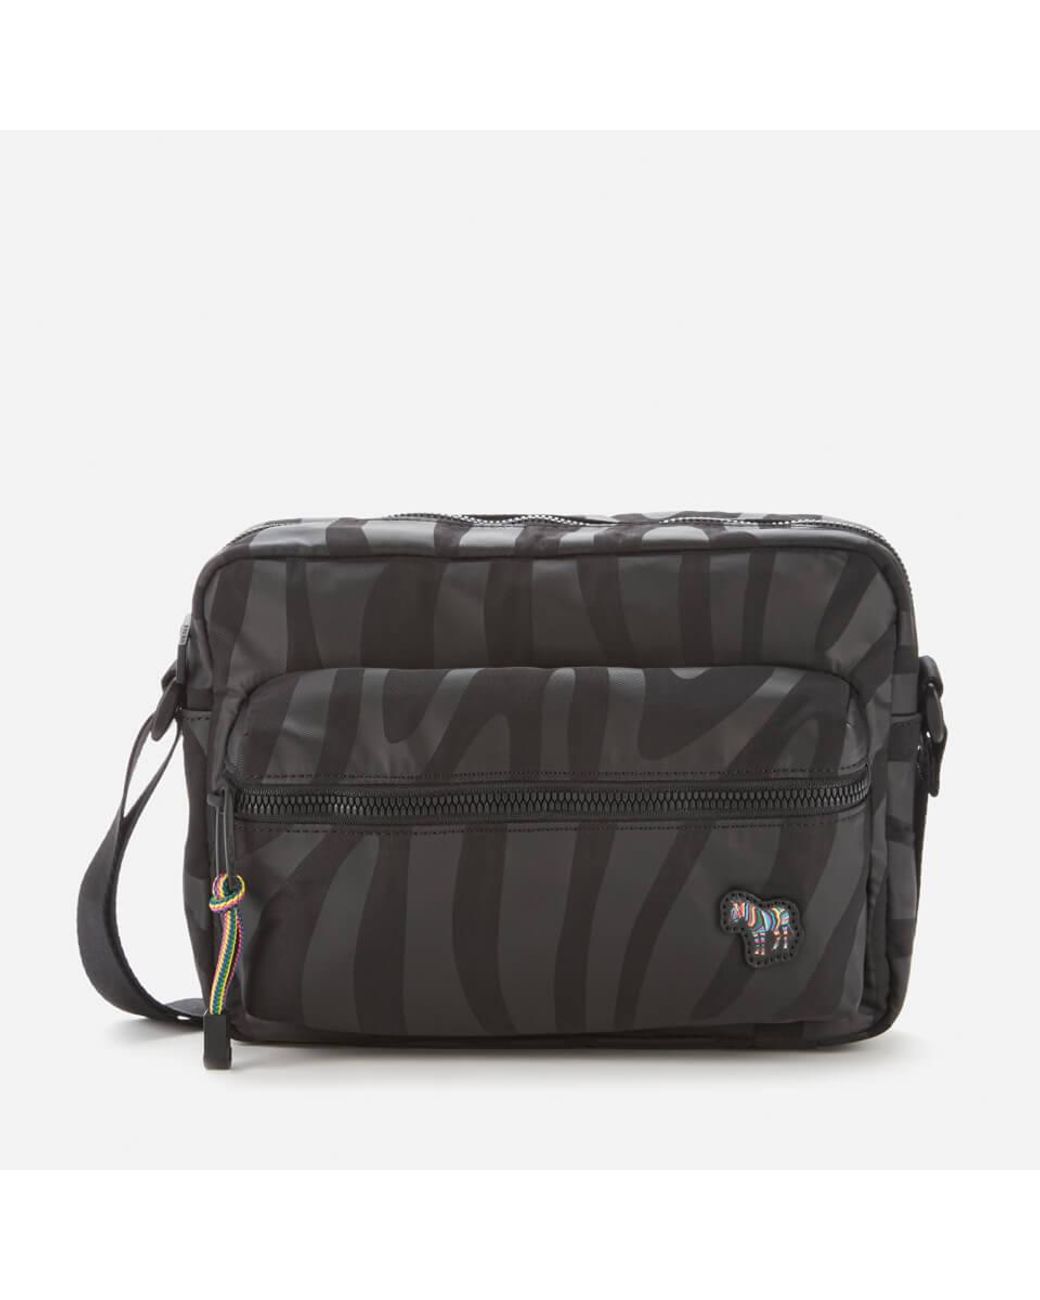  PS Paul Smith Men's Zebra Cross Body Bag, Khaki